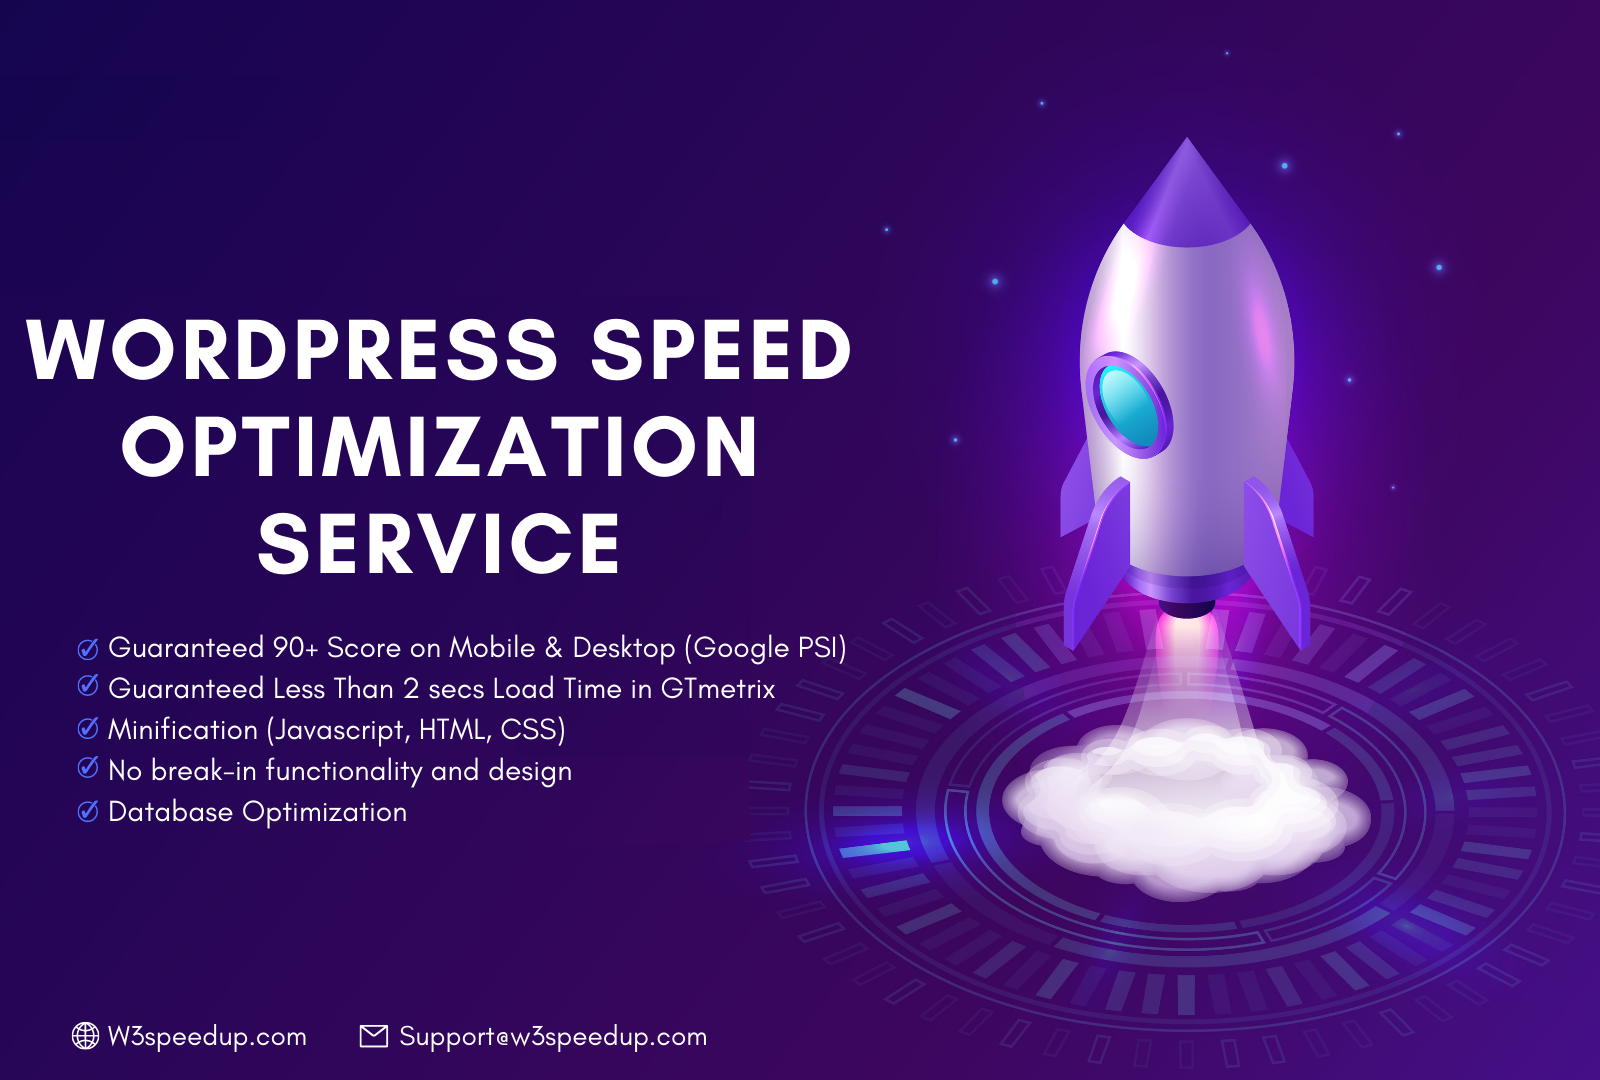 WordPress Speed Optimization Service, Assured 90+ on Mobile